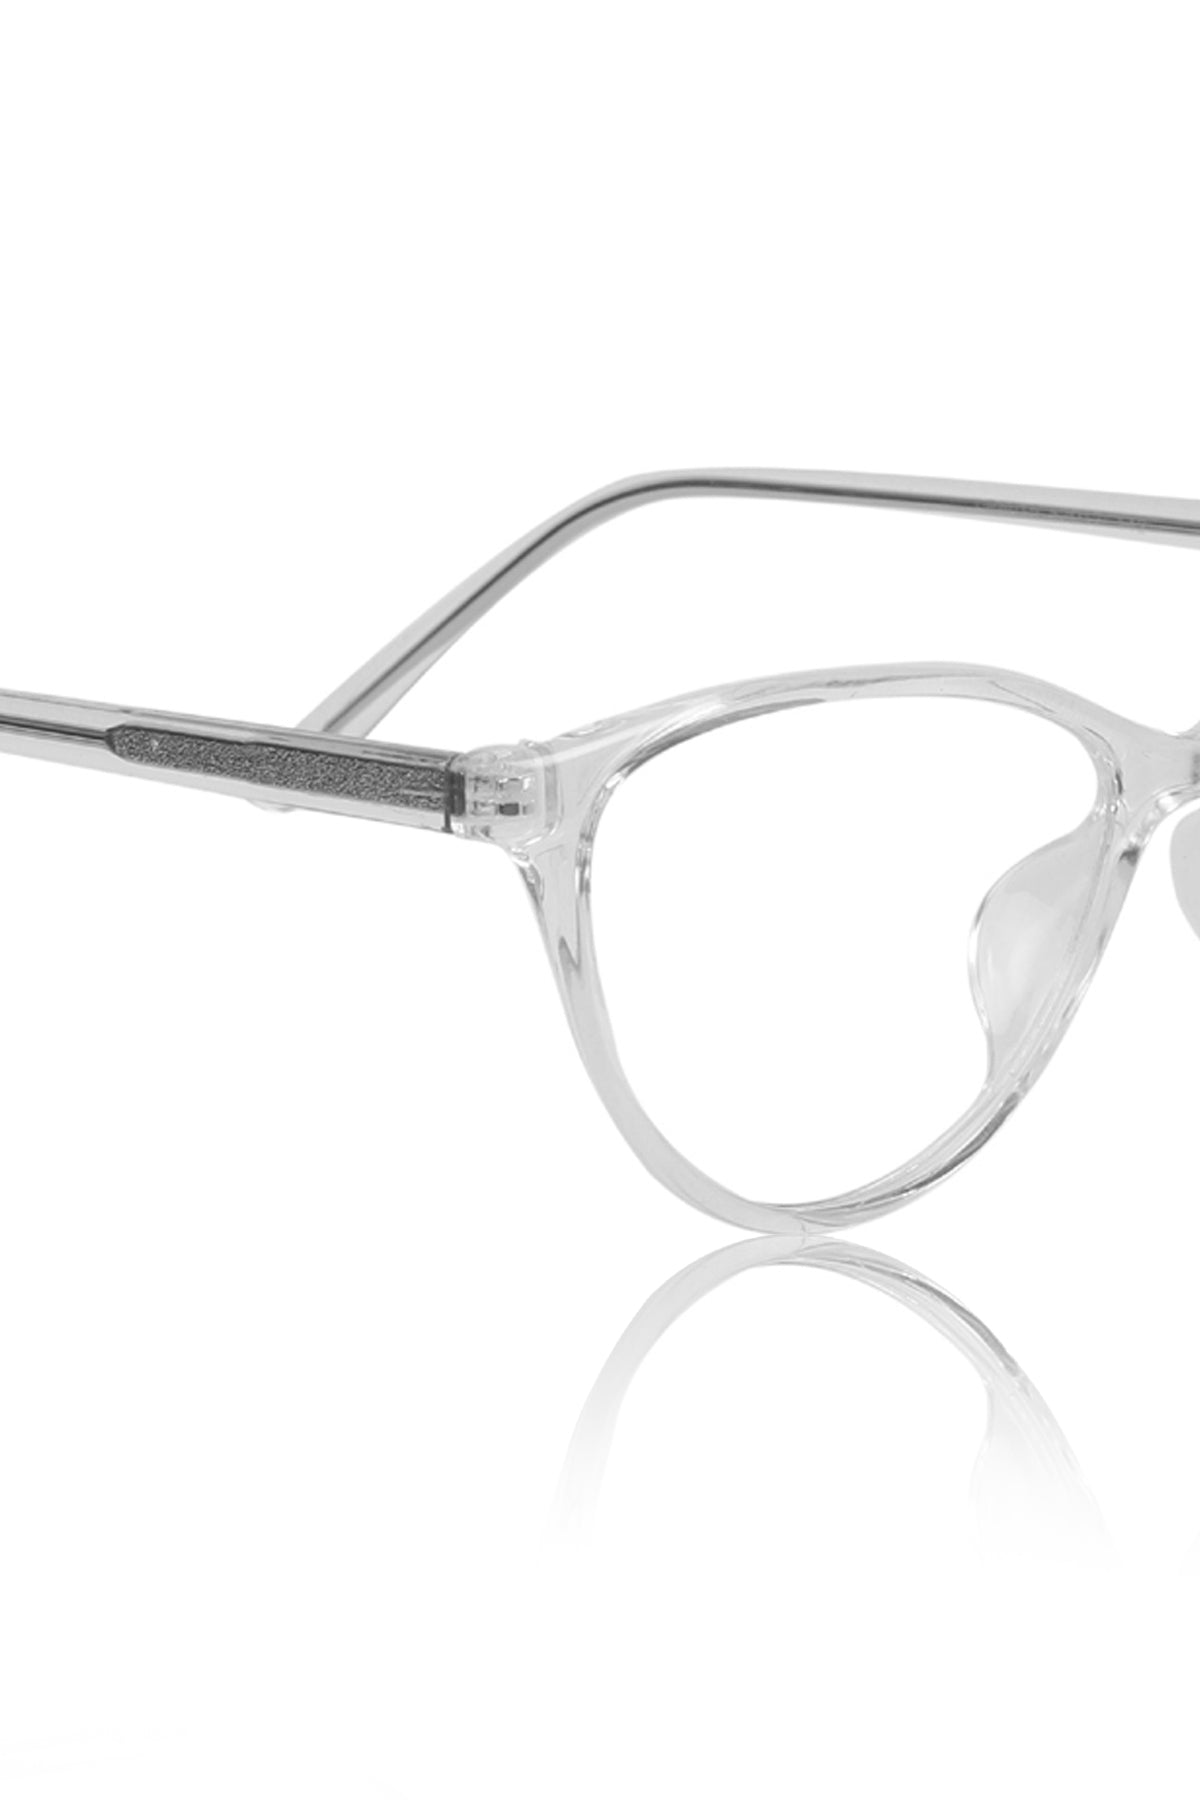 Jodykoes® Premium Series Cat Eye New Design Blu Cut Eyeglasses Pure Acetate Frame | Fashionable Spectacle Eyewear For Women (Transparent) - Jodykoes ®